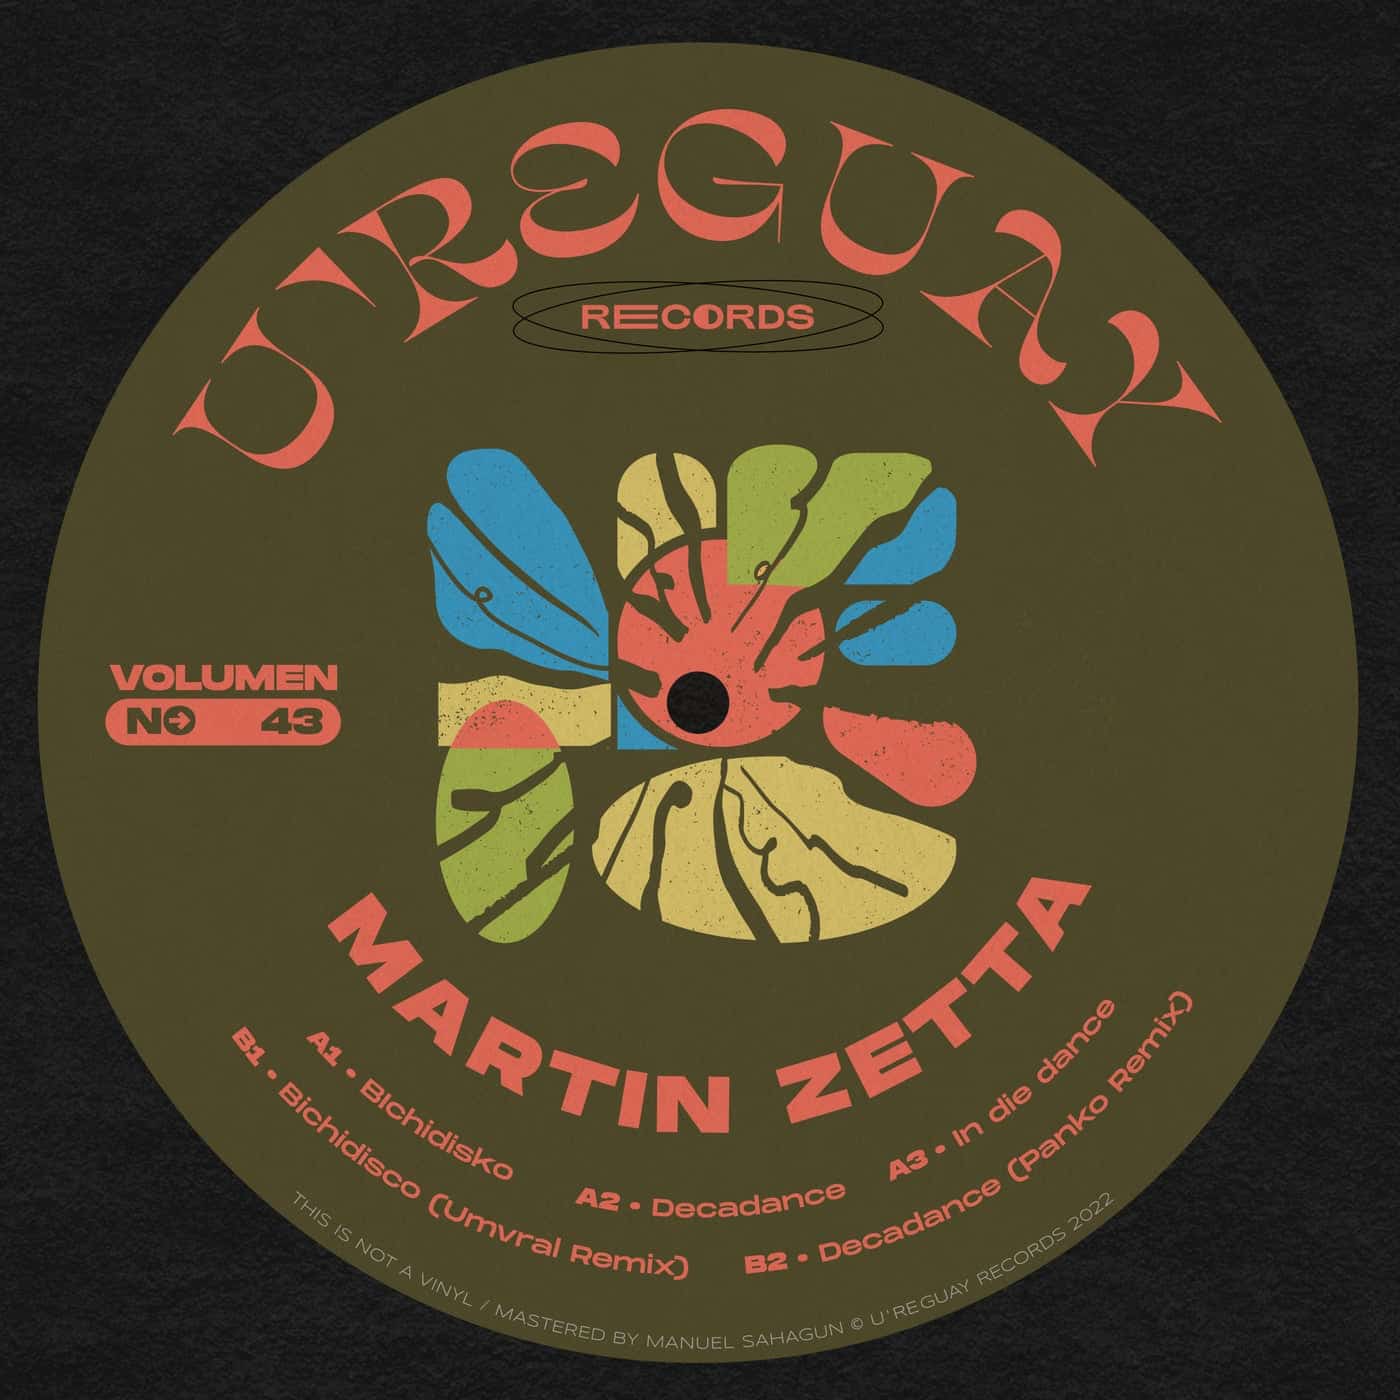 Download Martin Zetta - U're Guay, Vol. 43 on Electrobuzz